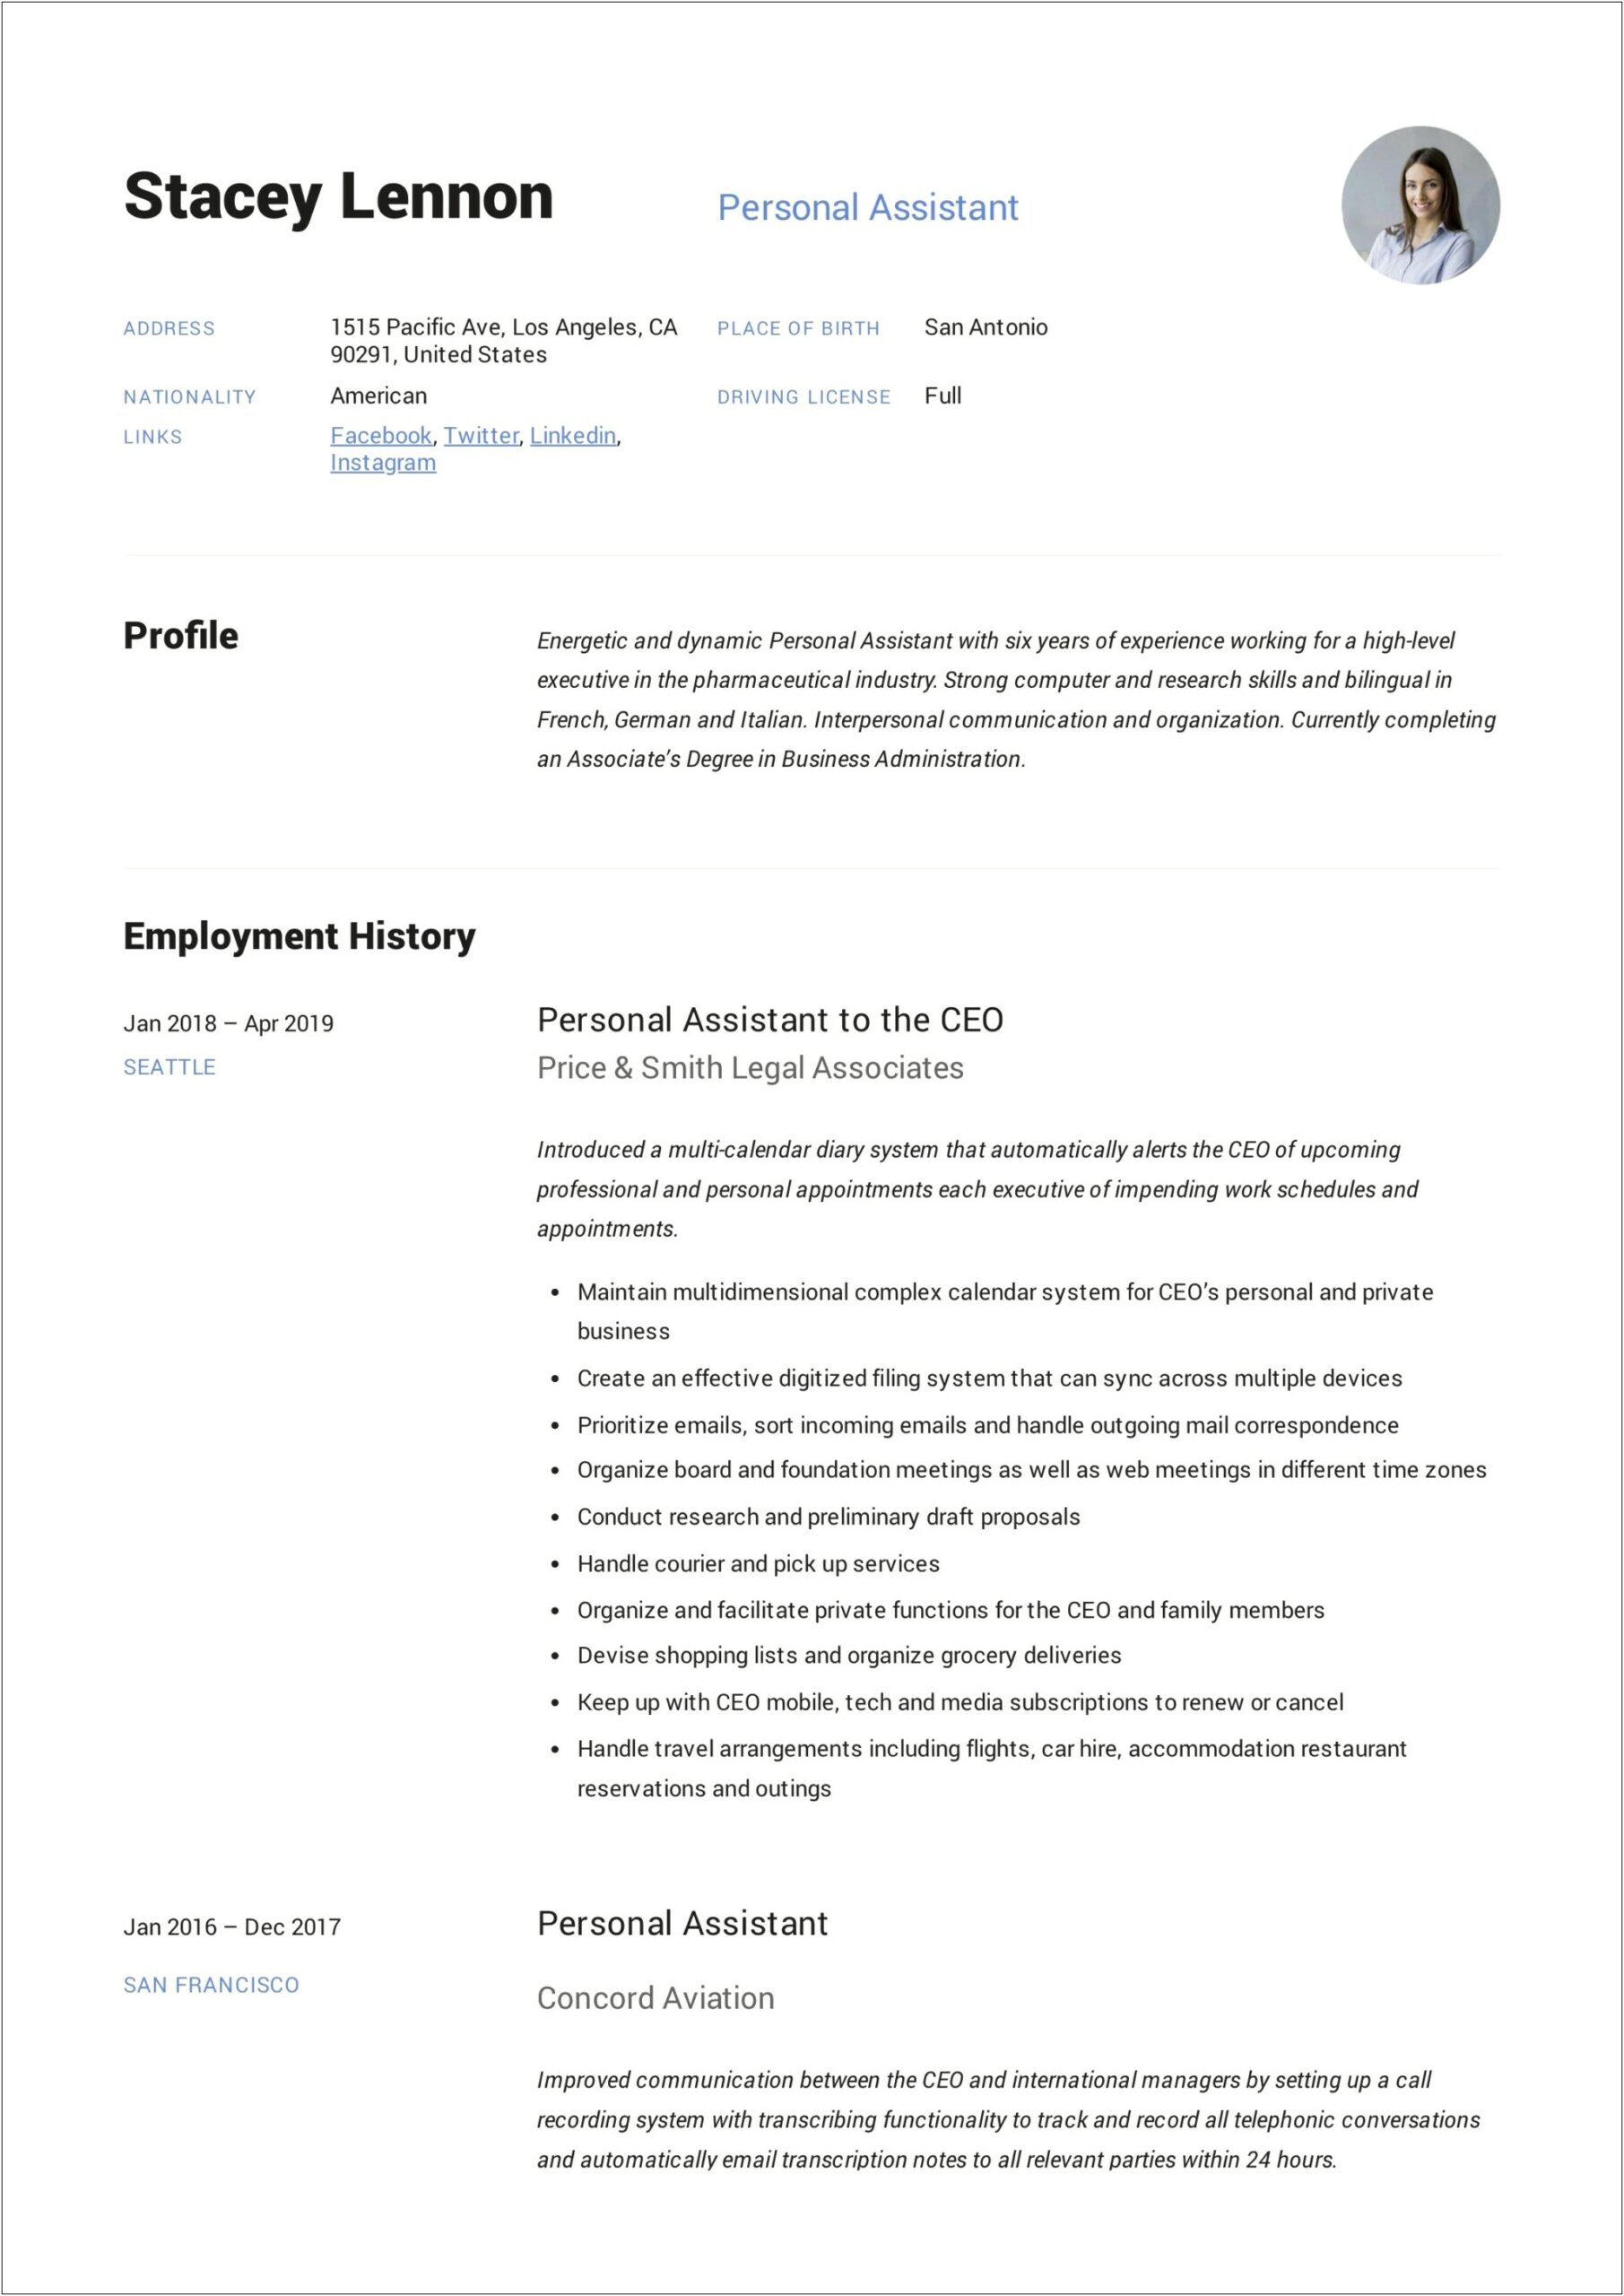 Personal Assistant Job Description Sample Resume